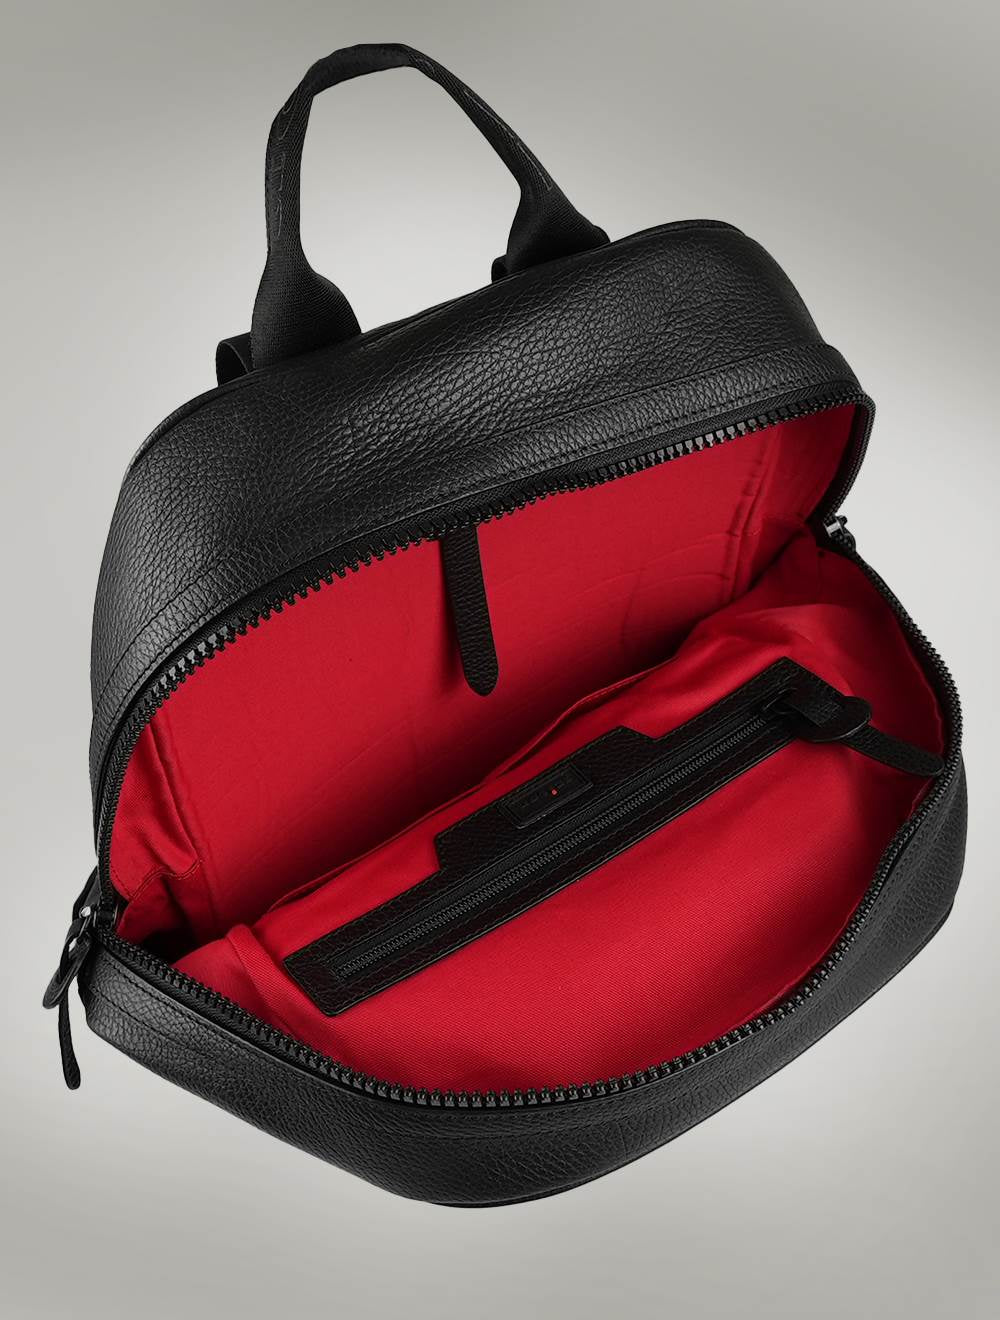 Kiton Black Leather Backpack